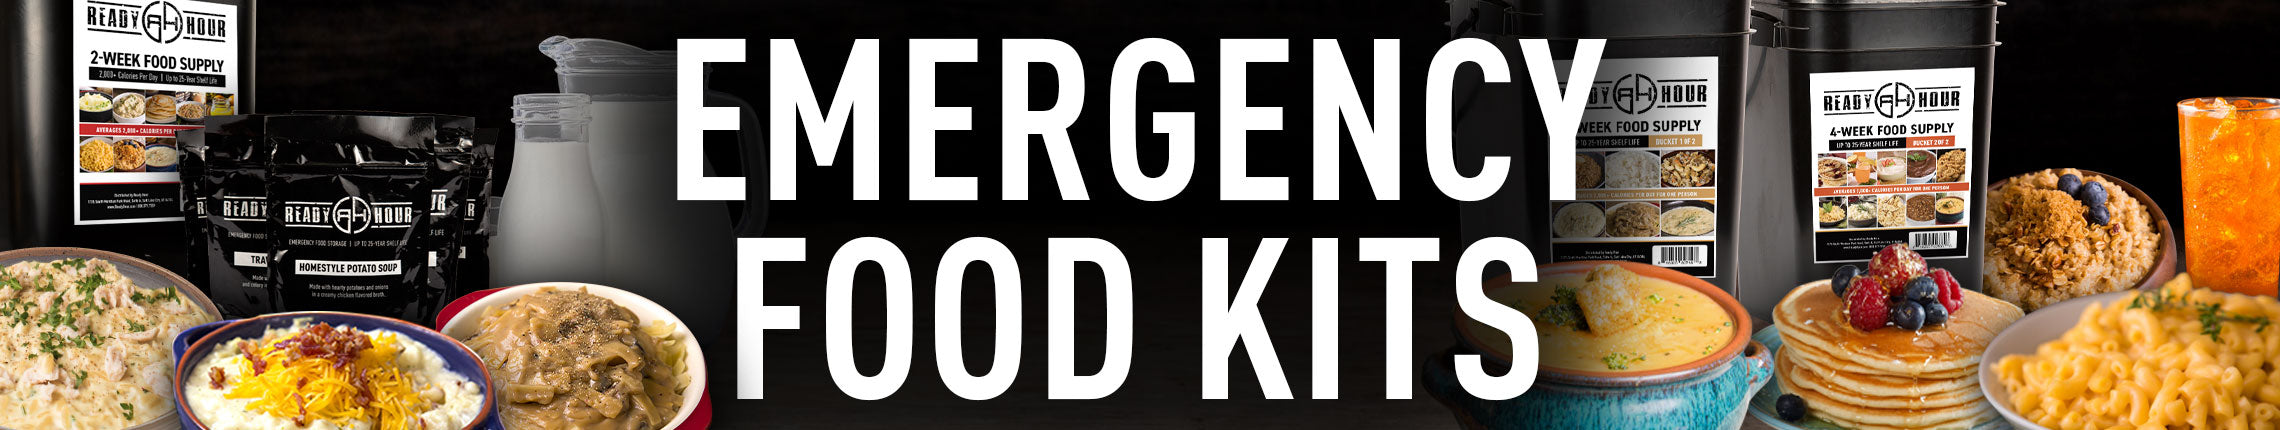 30-Day Emergency Food Supply Kit